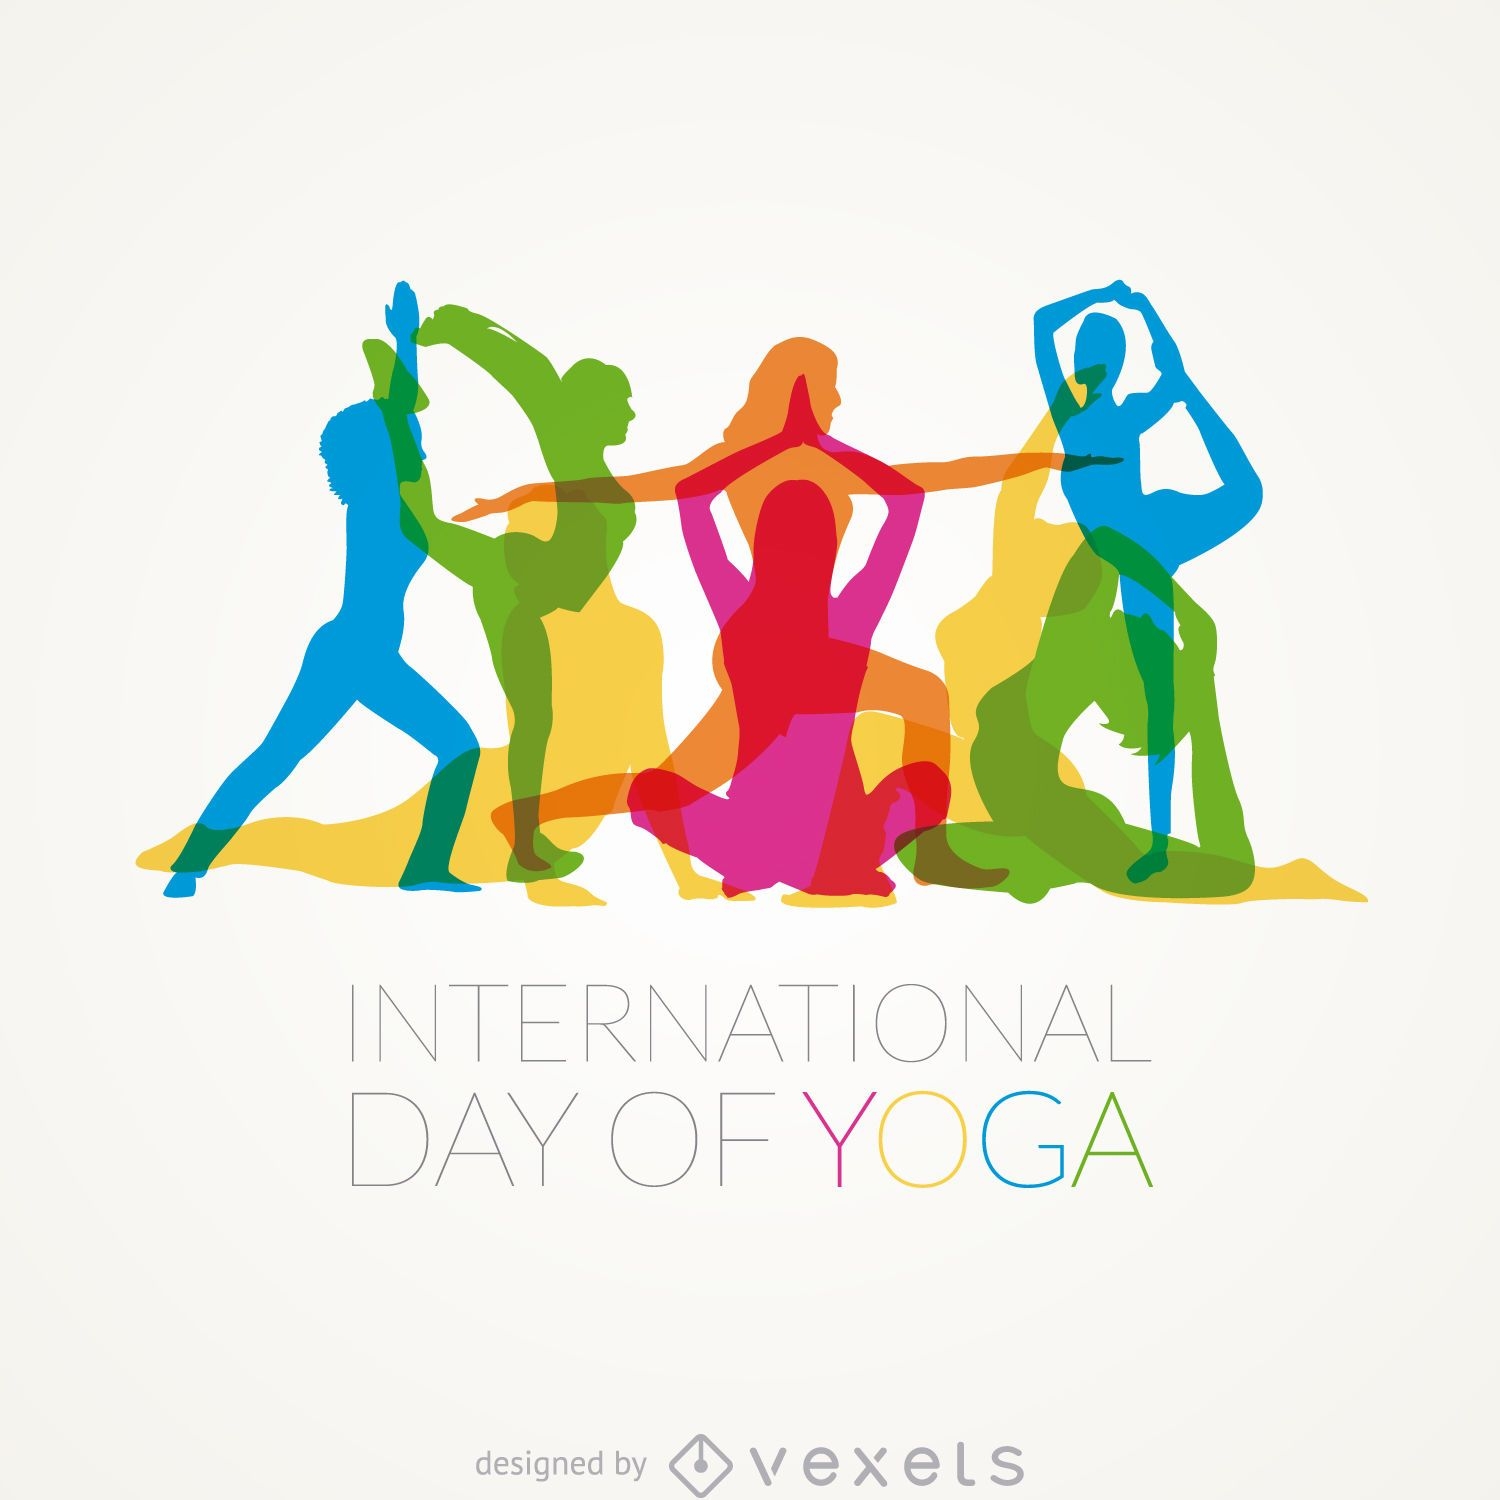 International Day of Yoga poses